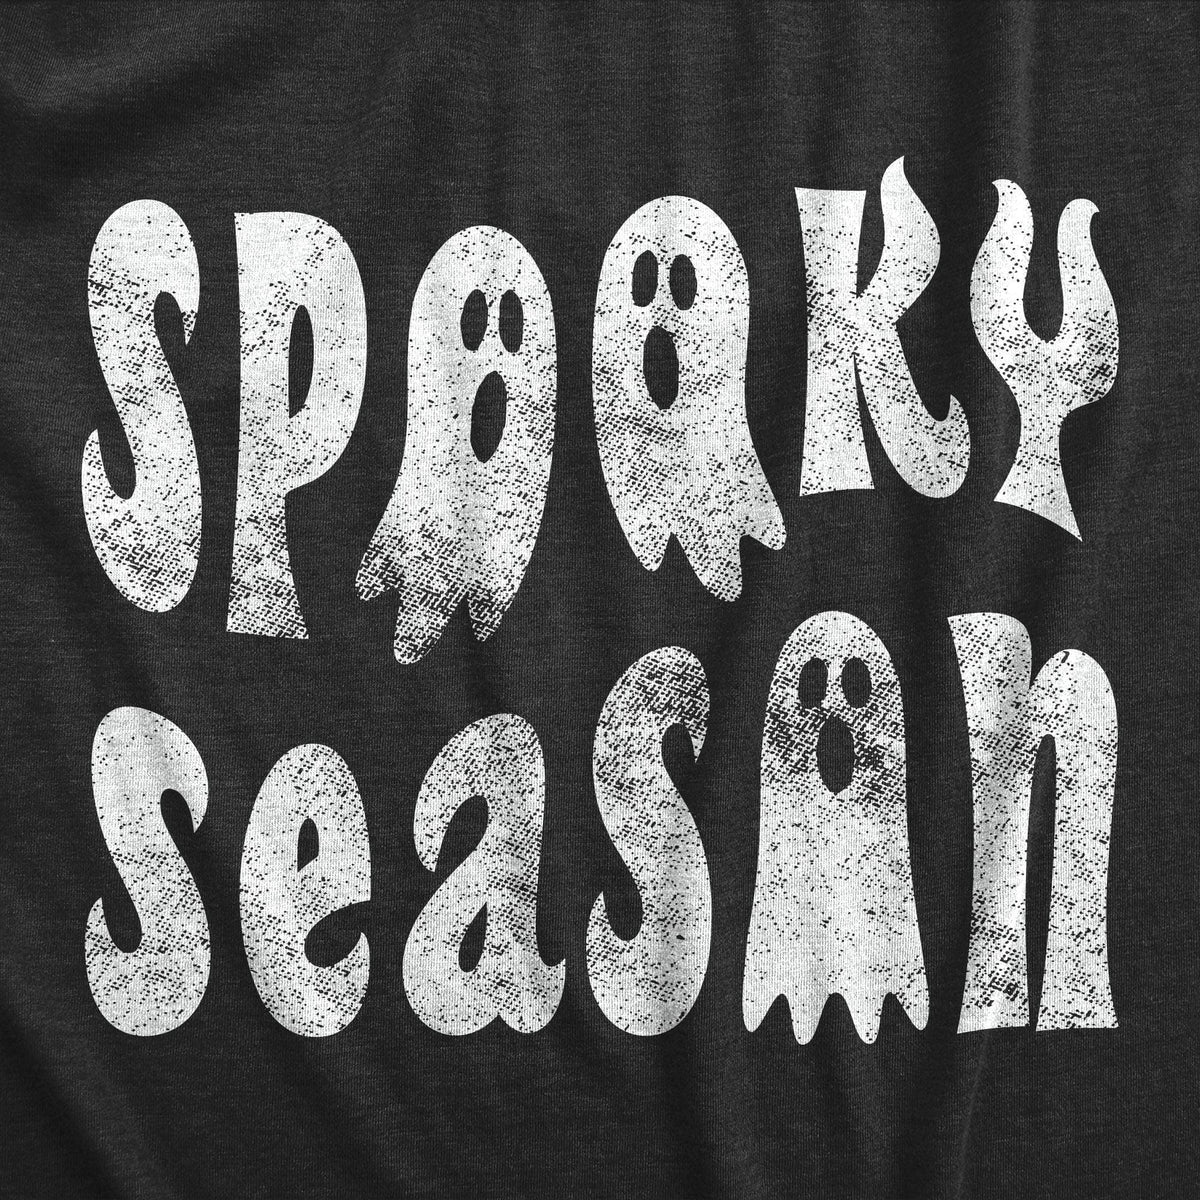 Spooky Season Men&#39;s Tshirt  -  Crazy Dog T-Shirts